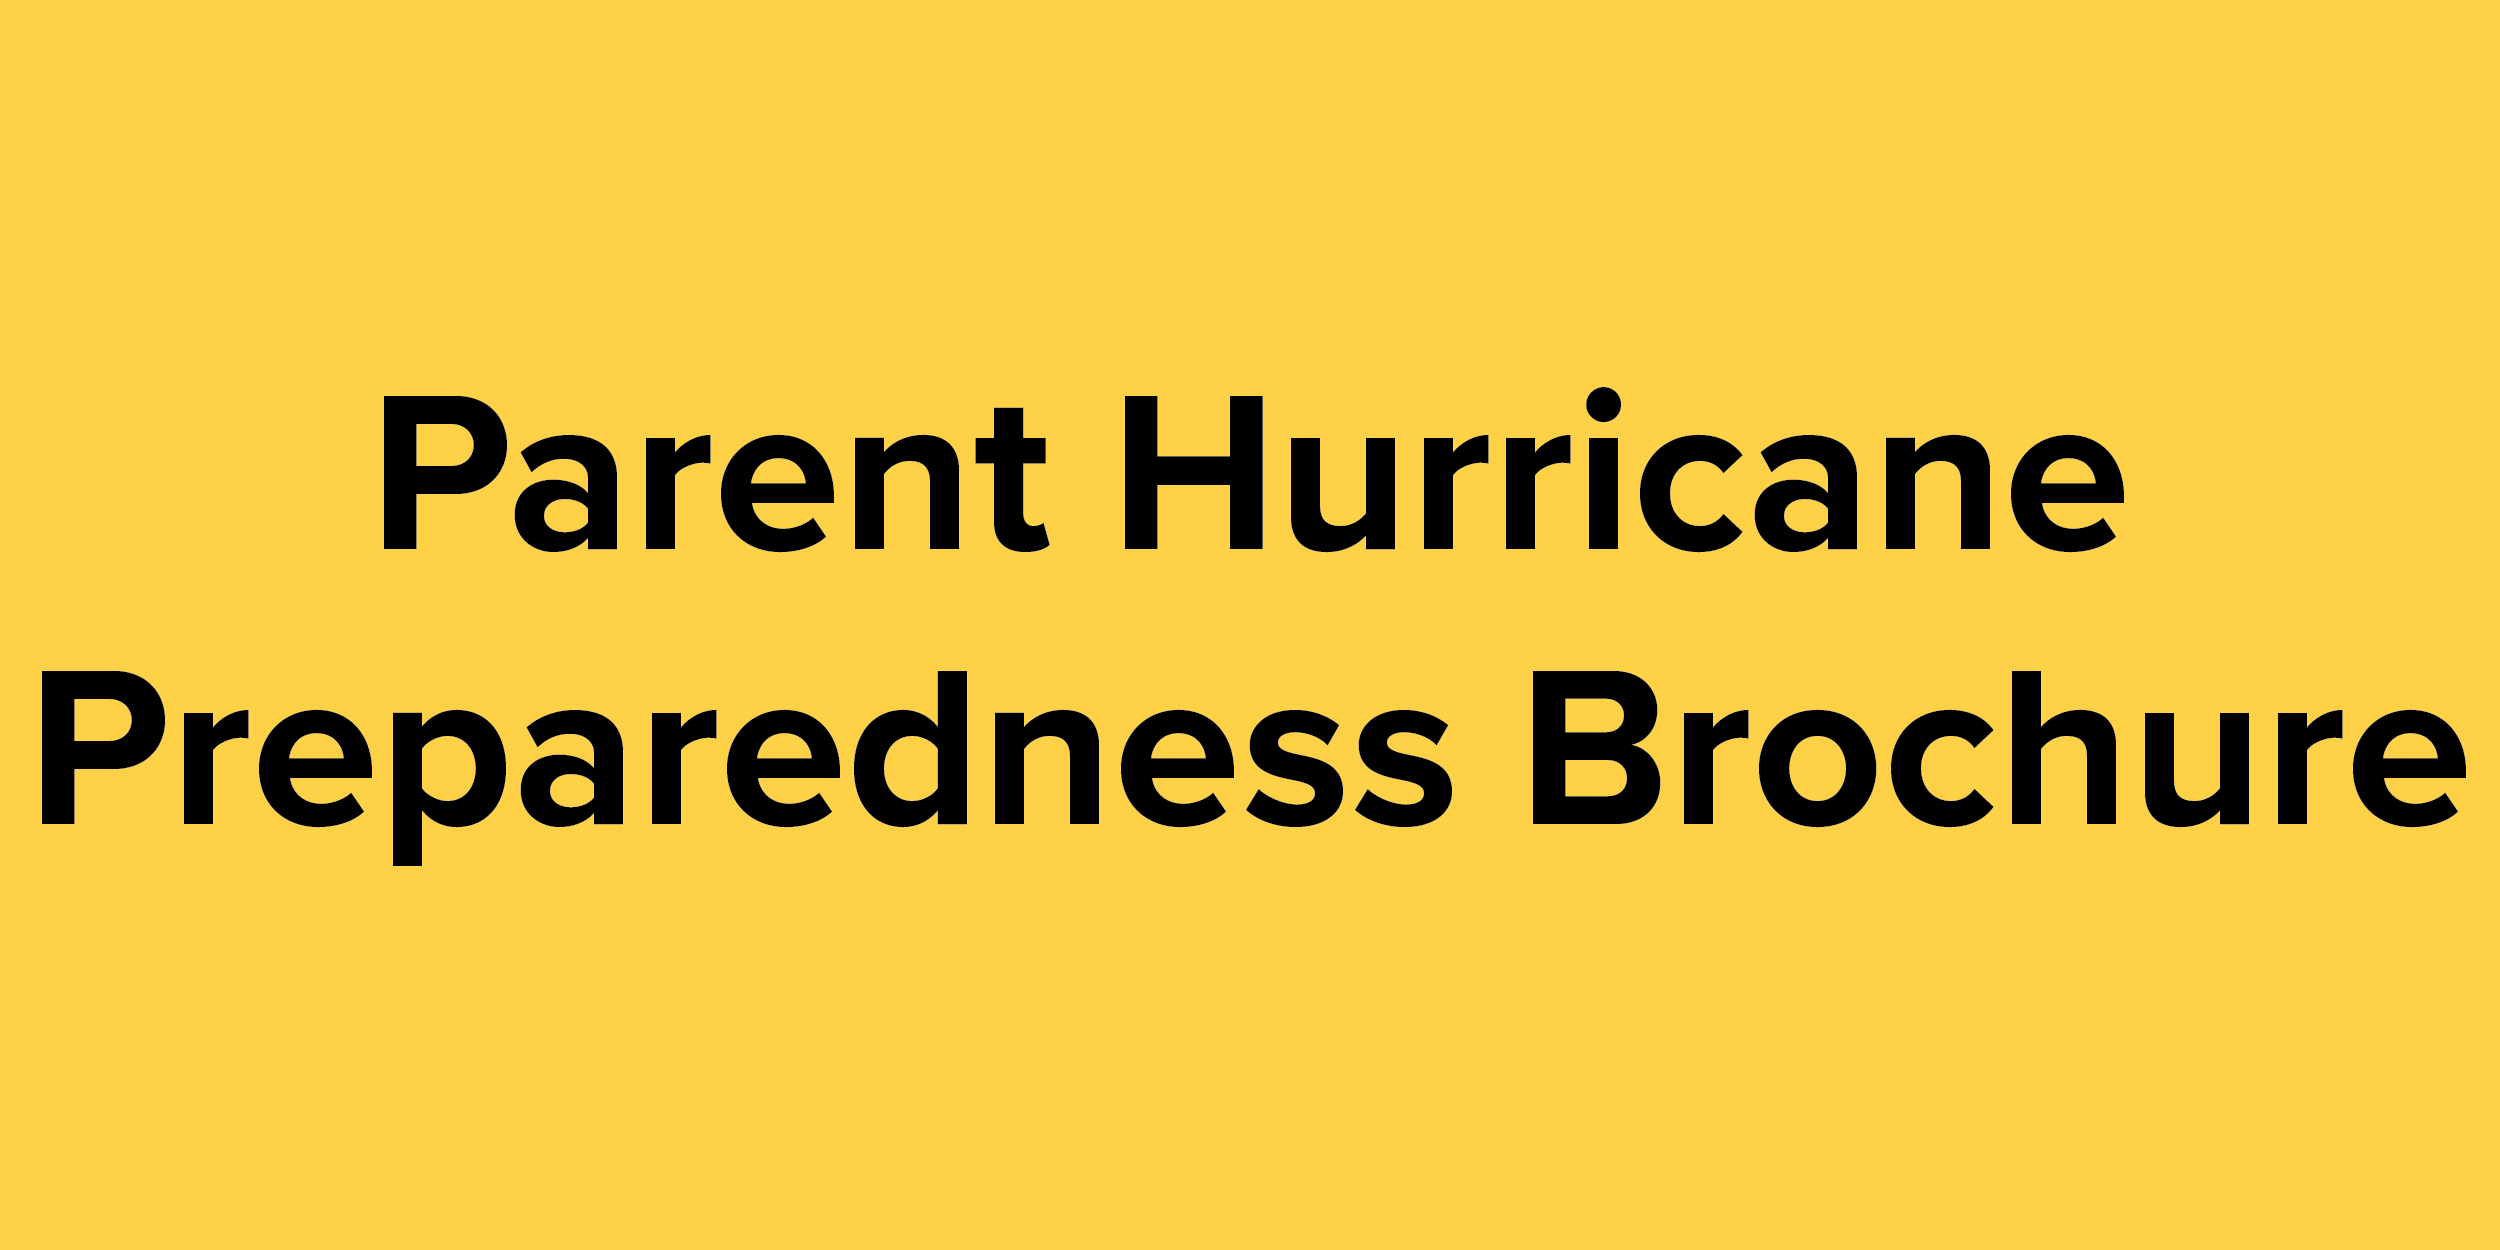 Parent Hurricane Preparedness Brochure